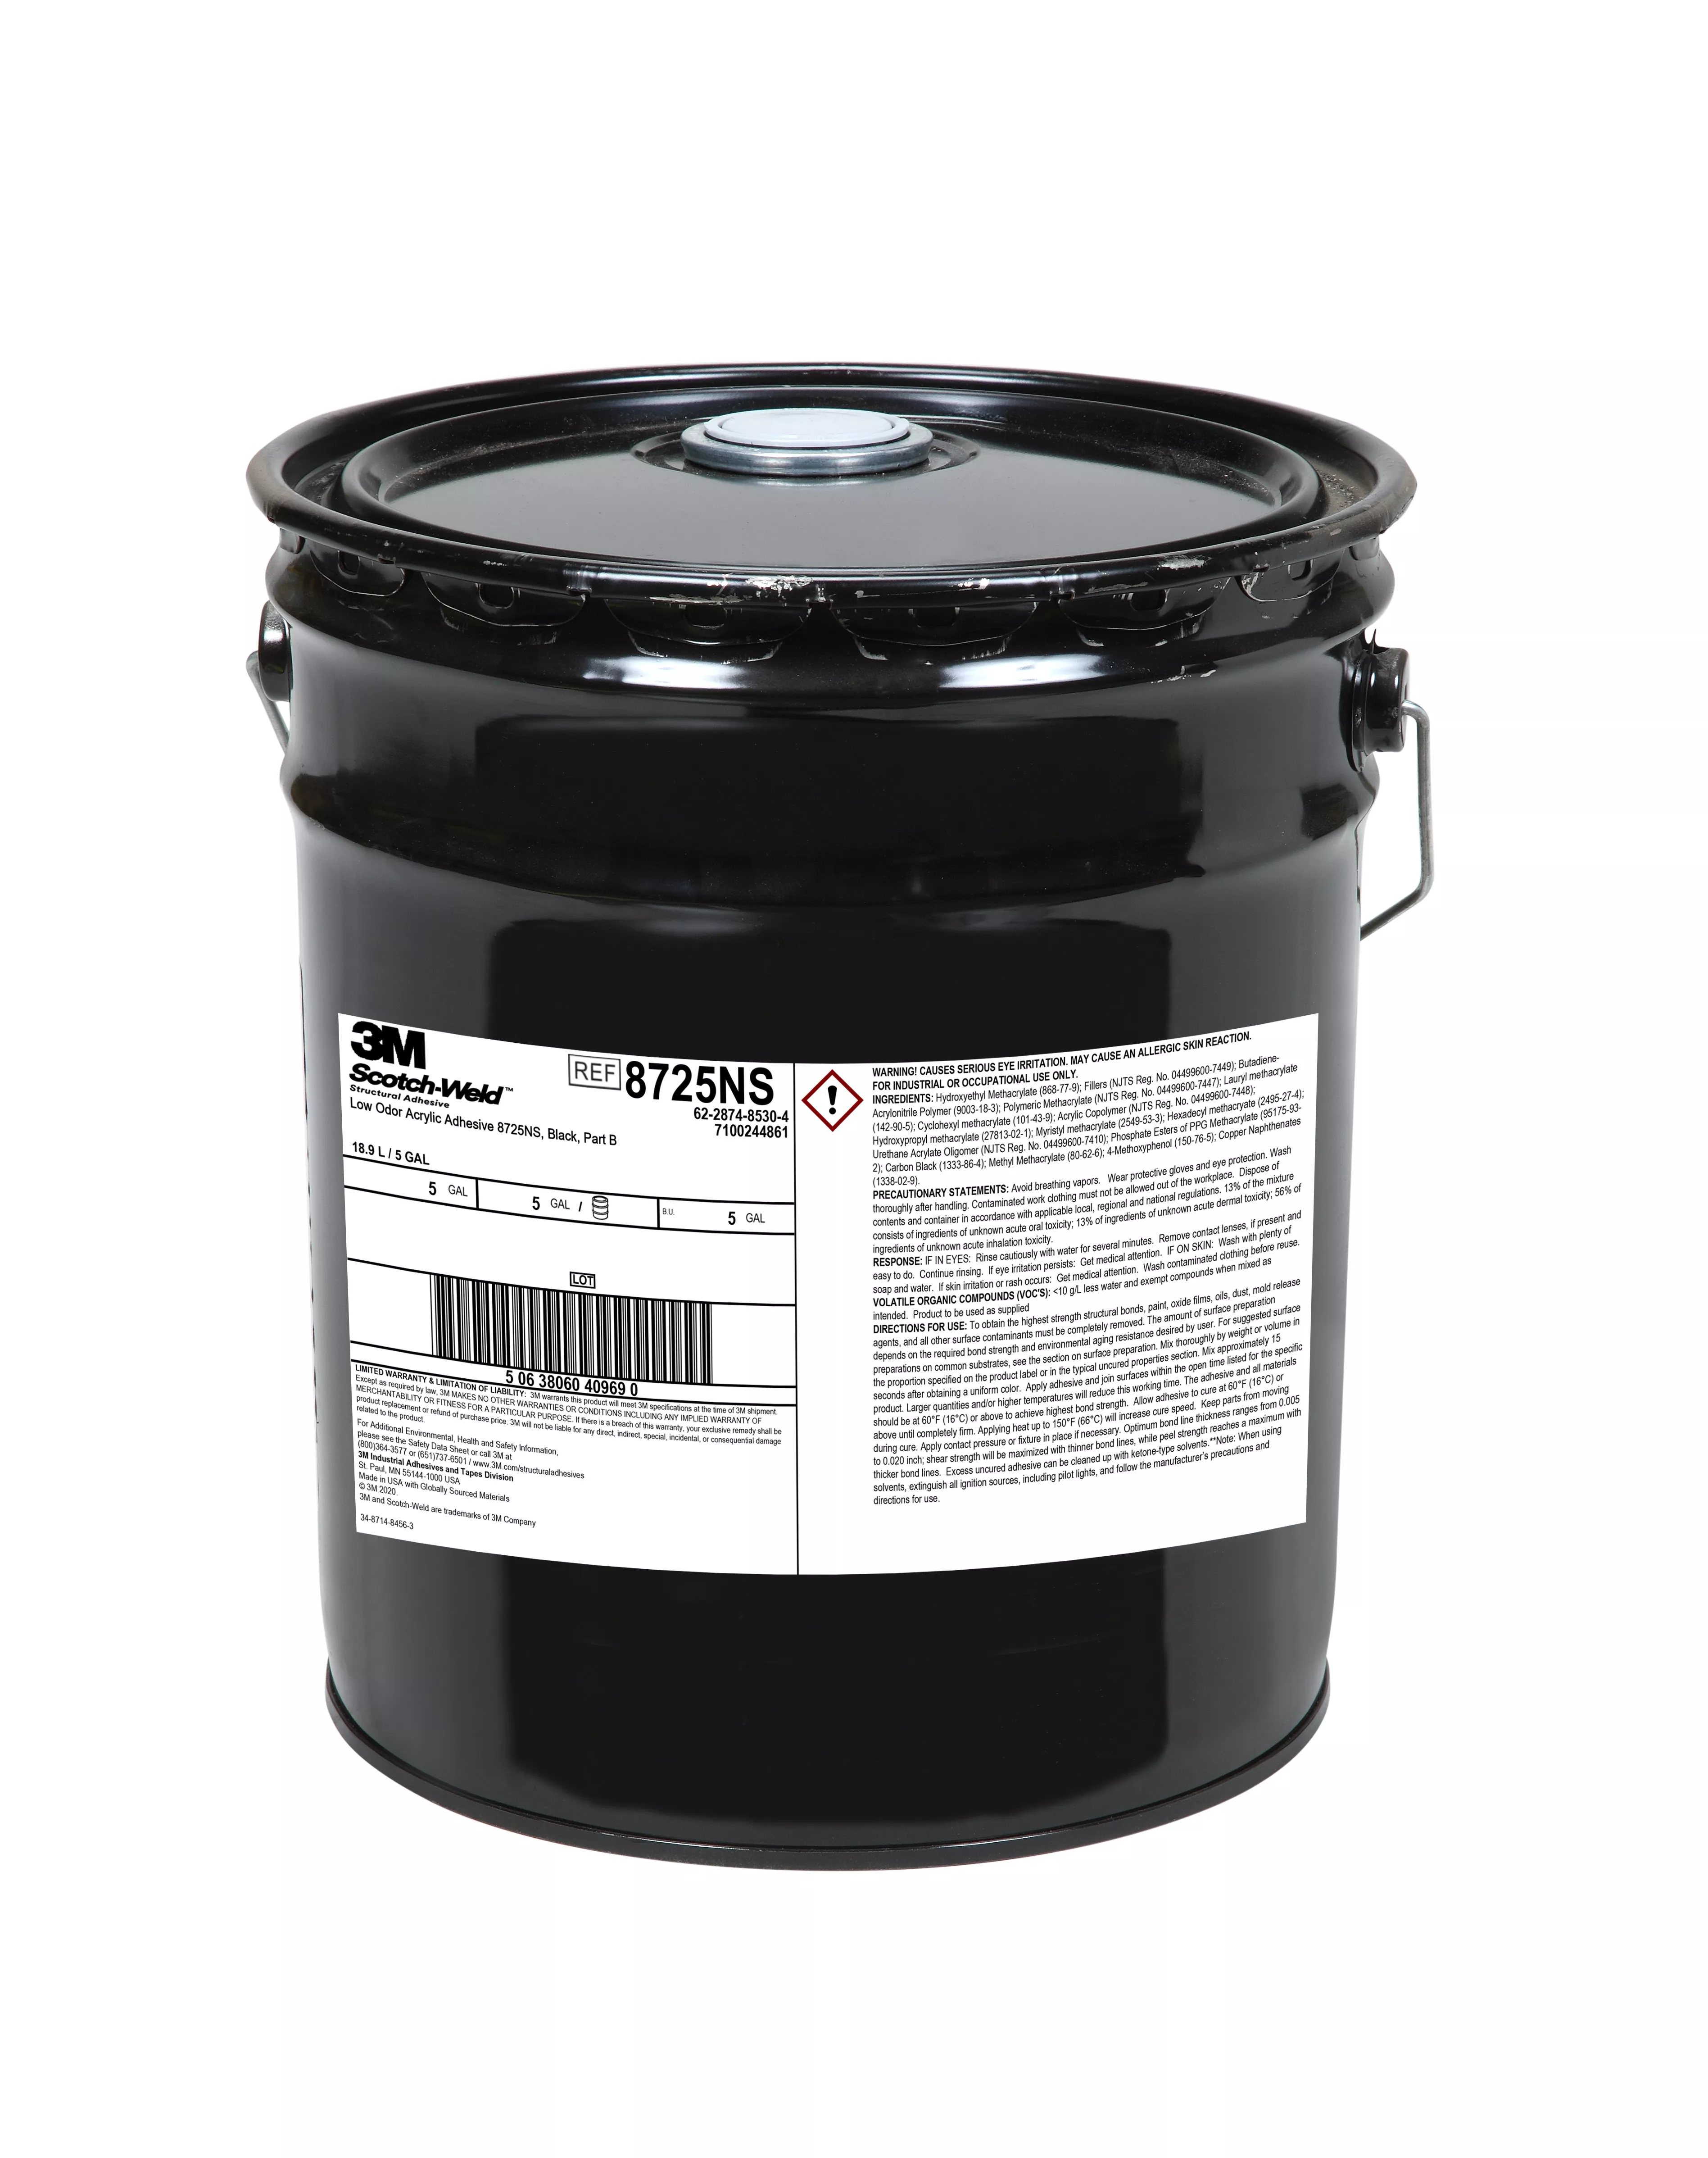 3M™ Scotch-Weld™ Low Odor Acrylic Adhesive 8725NS, Black, Part B, 5
Gallon (Pail), Drum